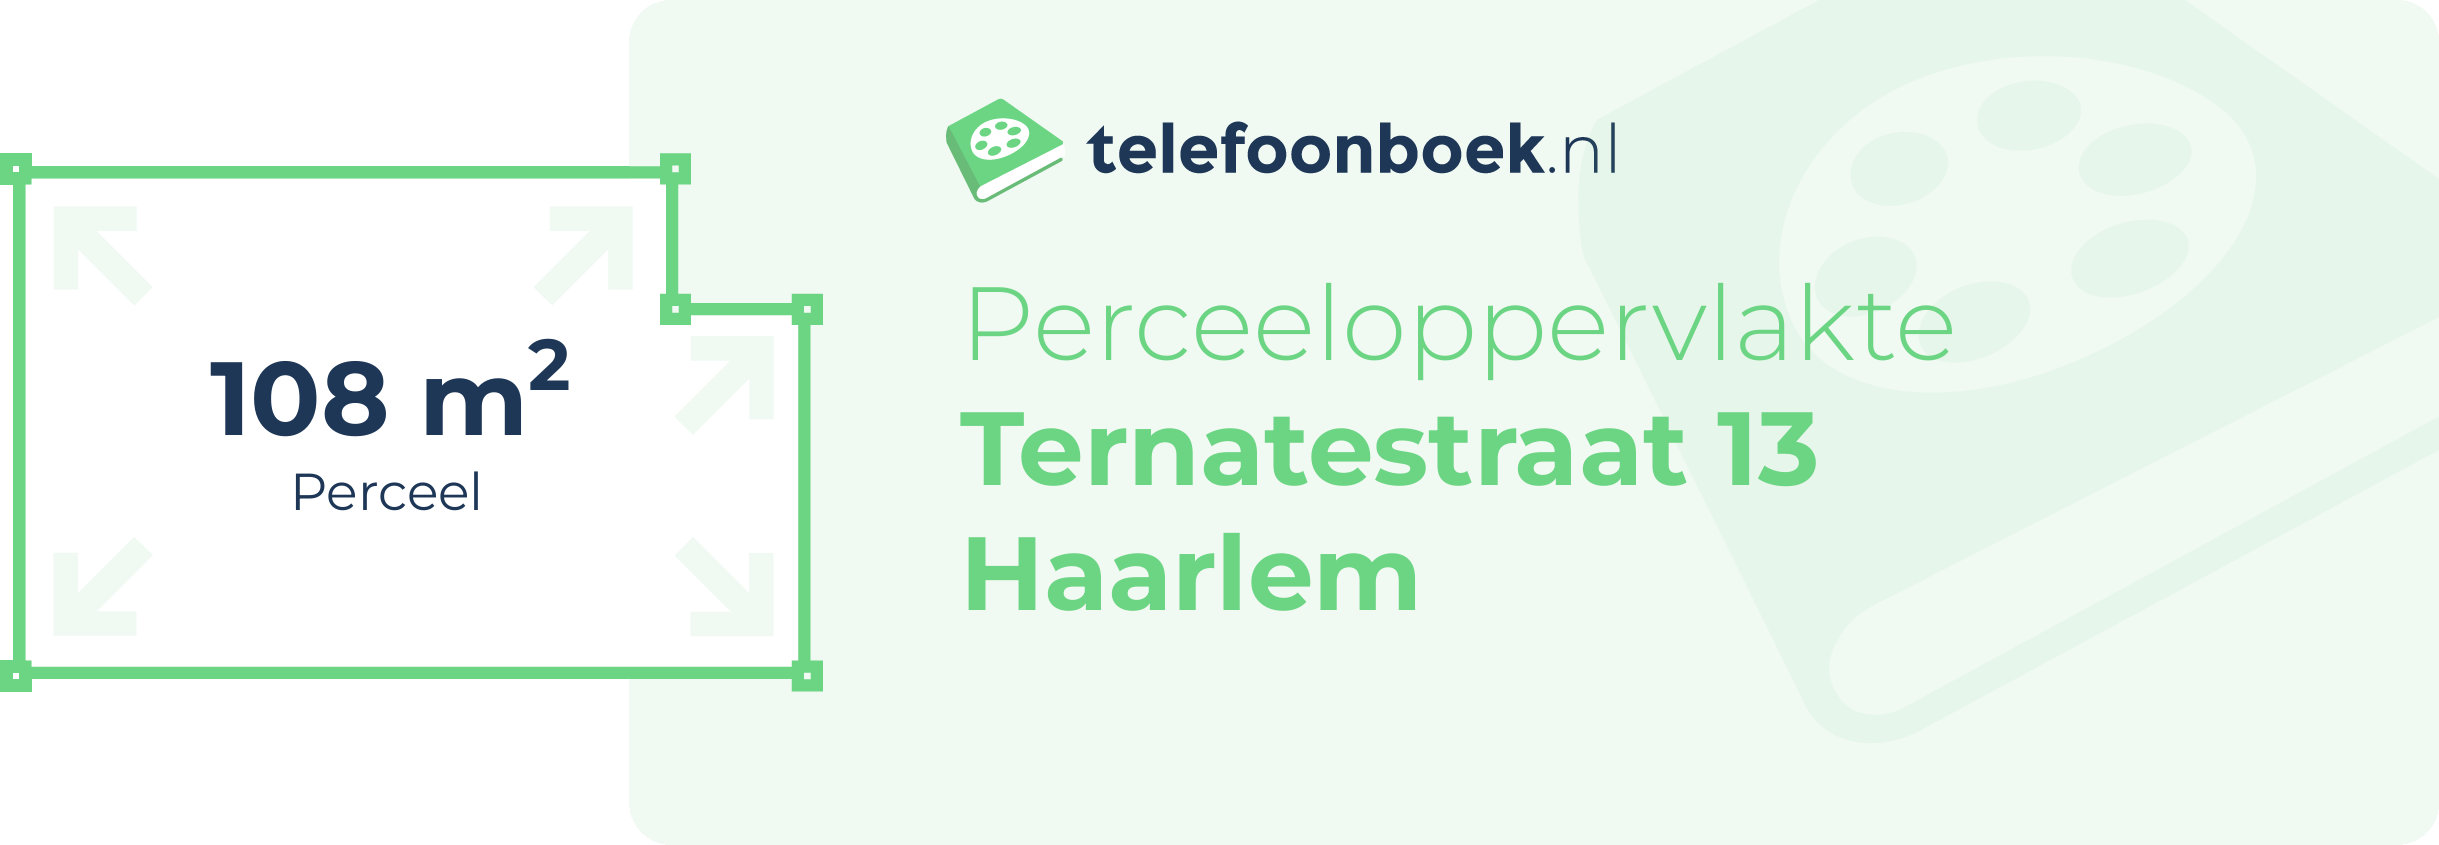 Perceeloppervlakte Ternatestraat 13 Haarlem